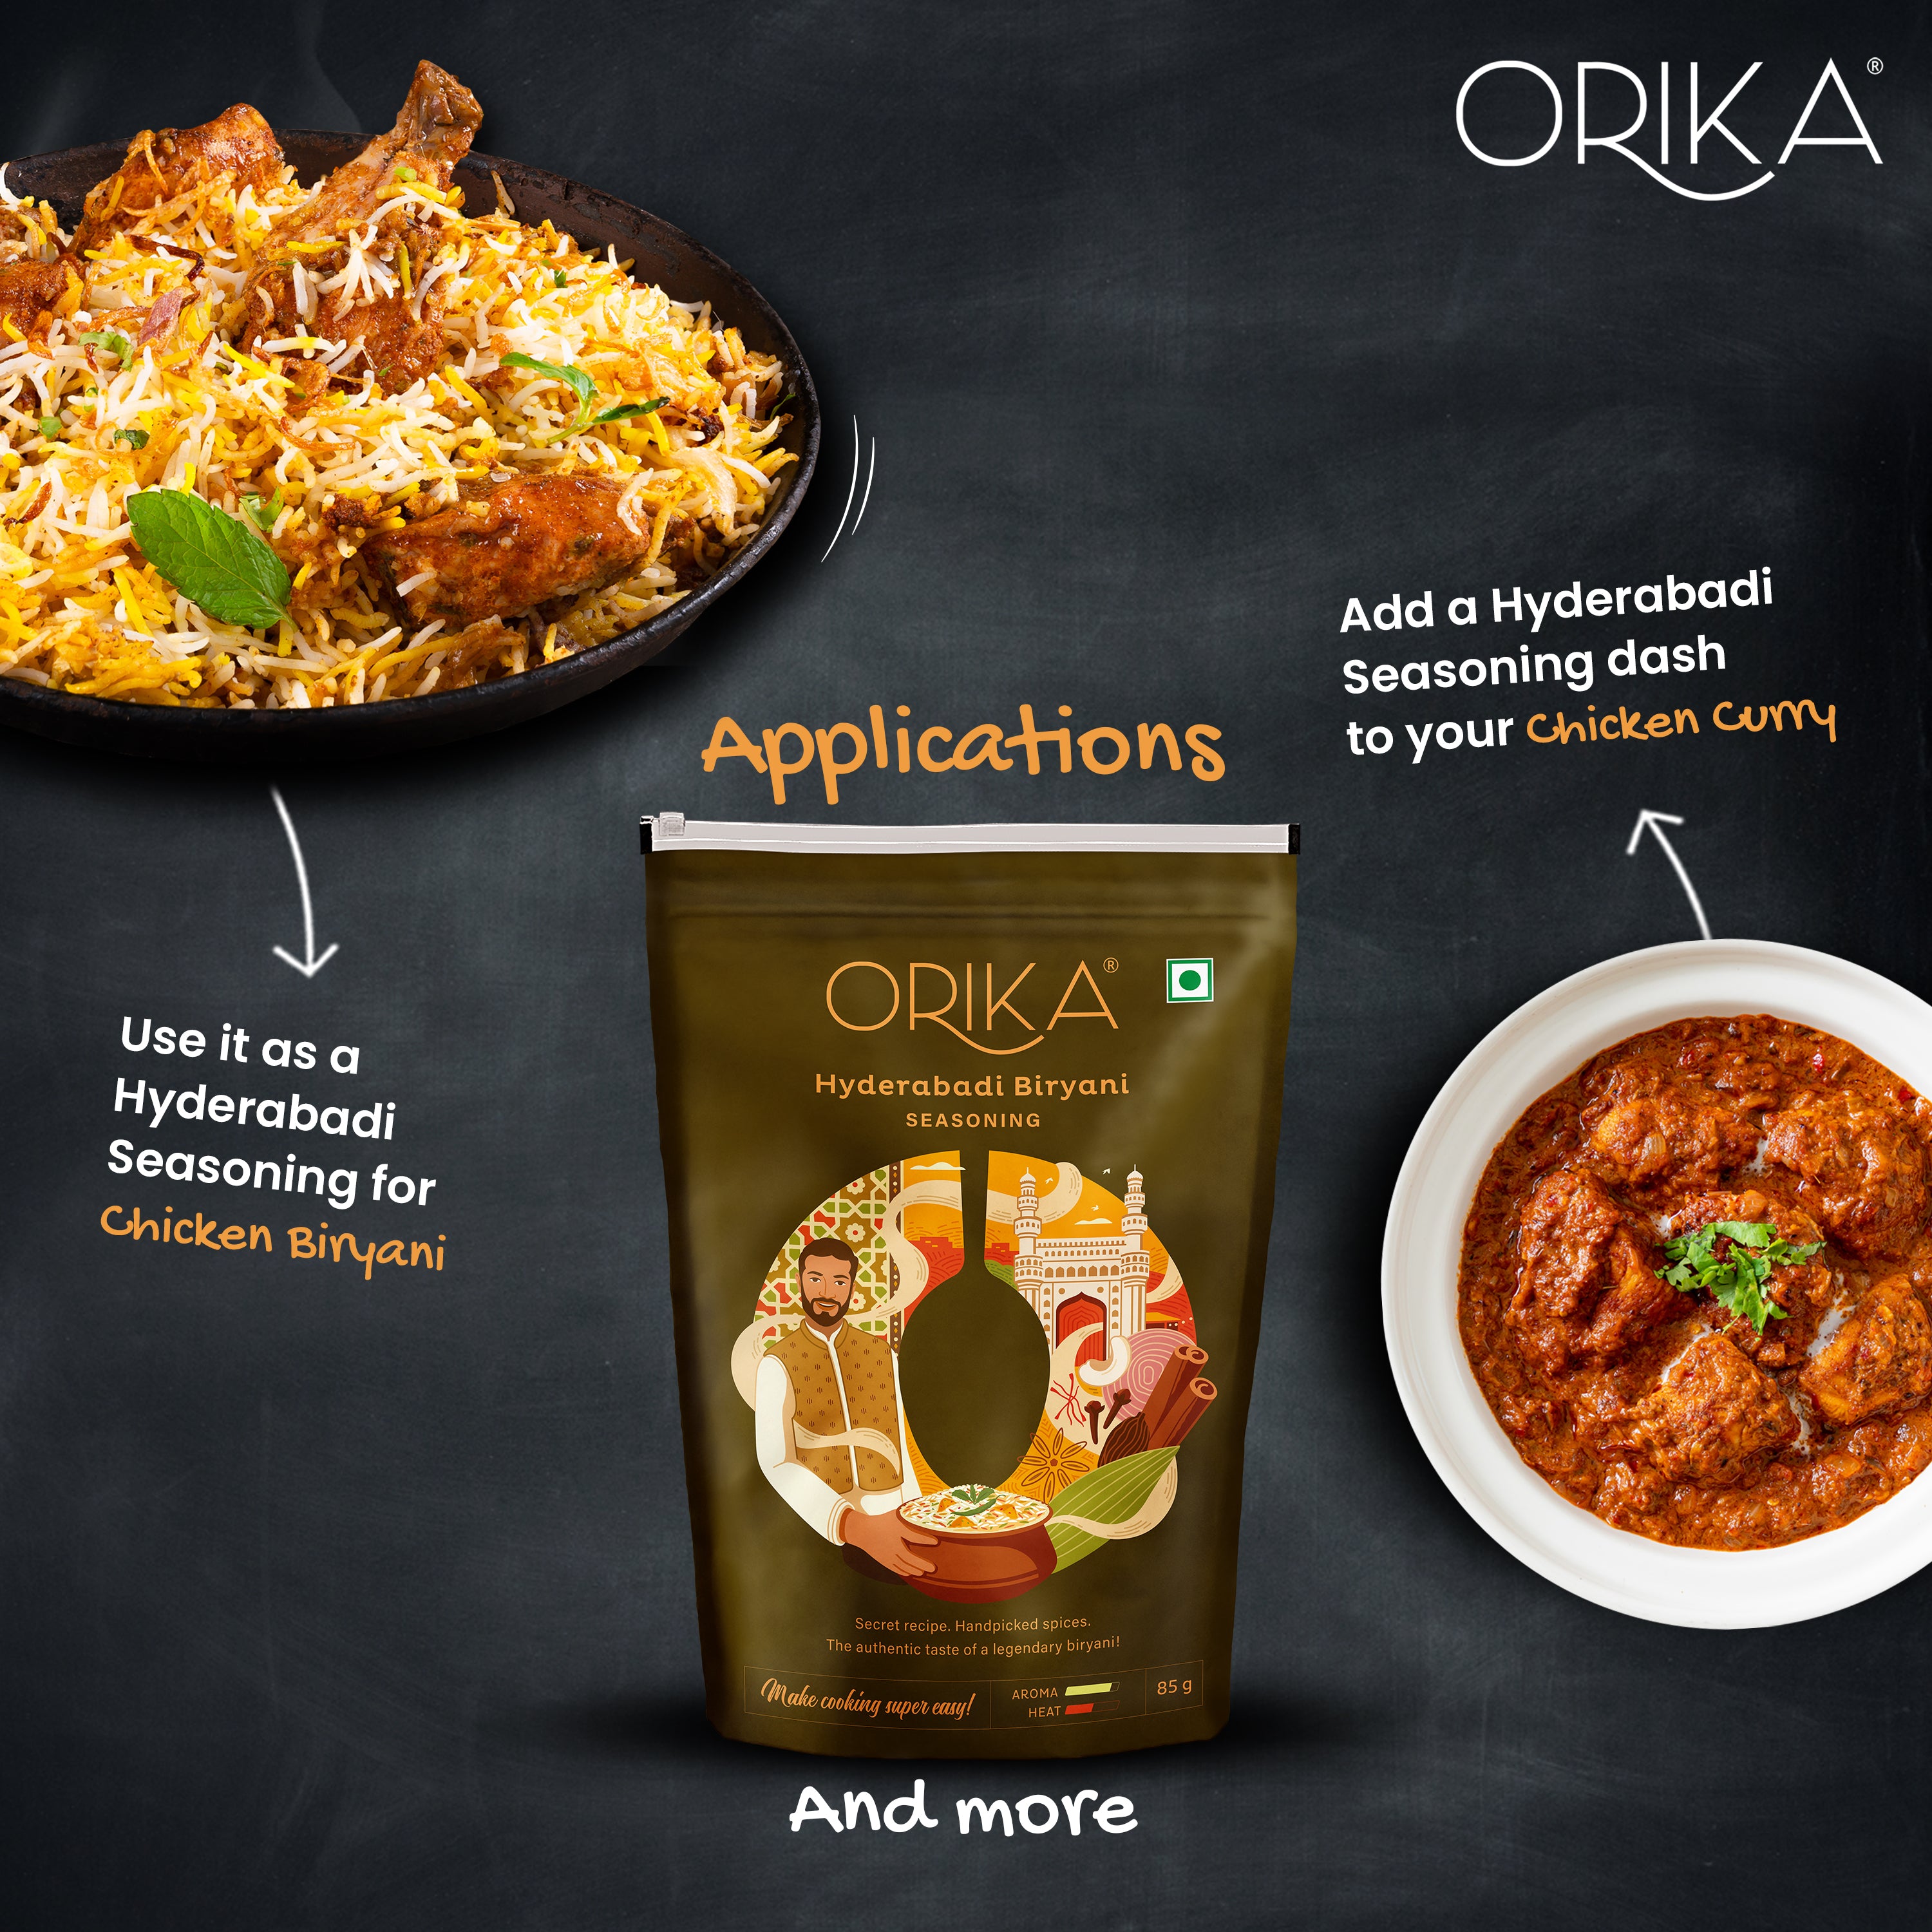 Orika Hyderabadi Biryani Seasoning, 85g - Orika Spices India